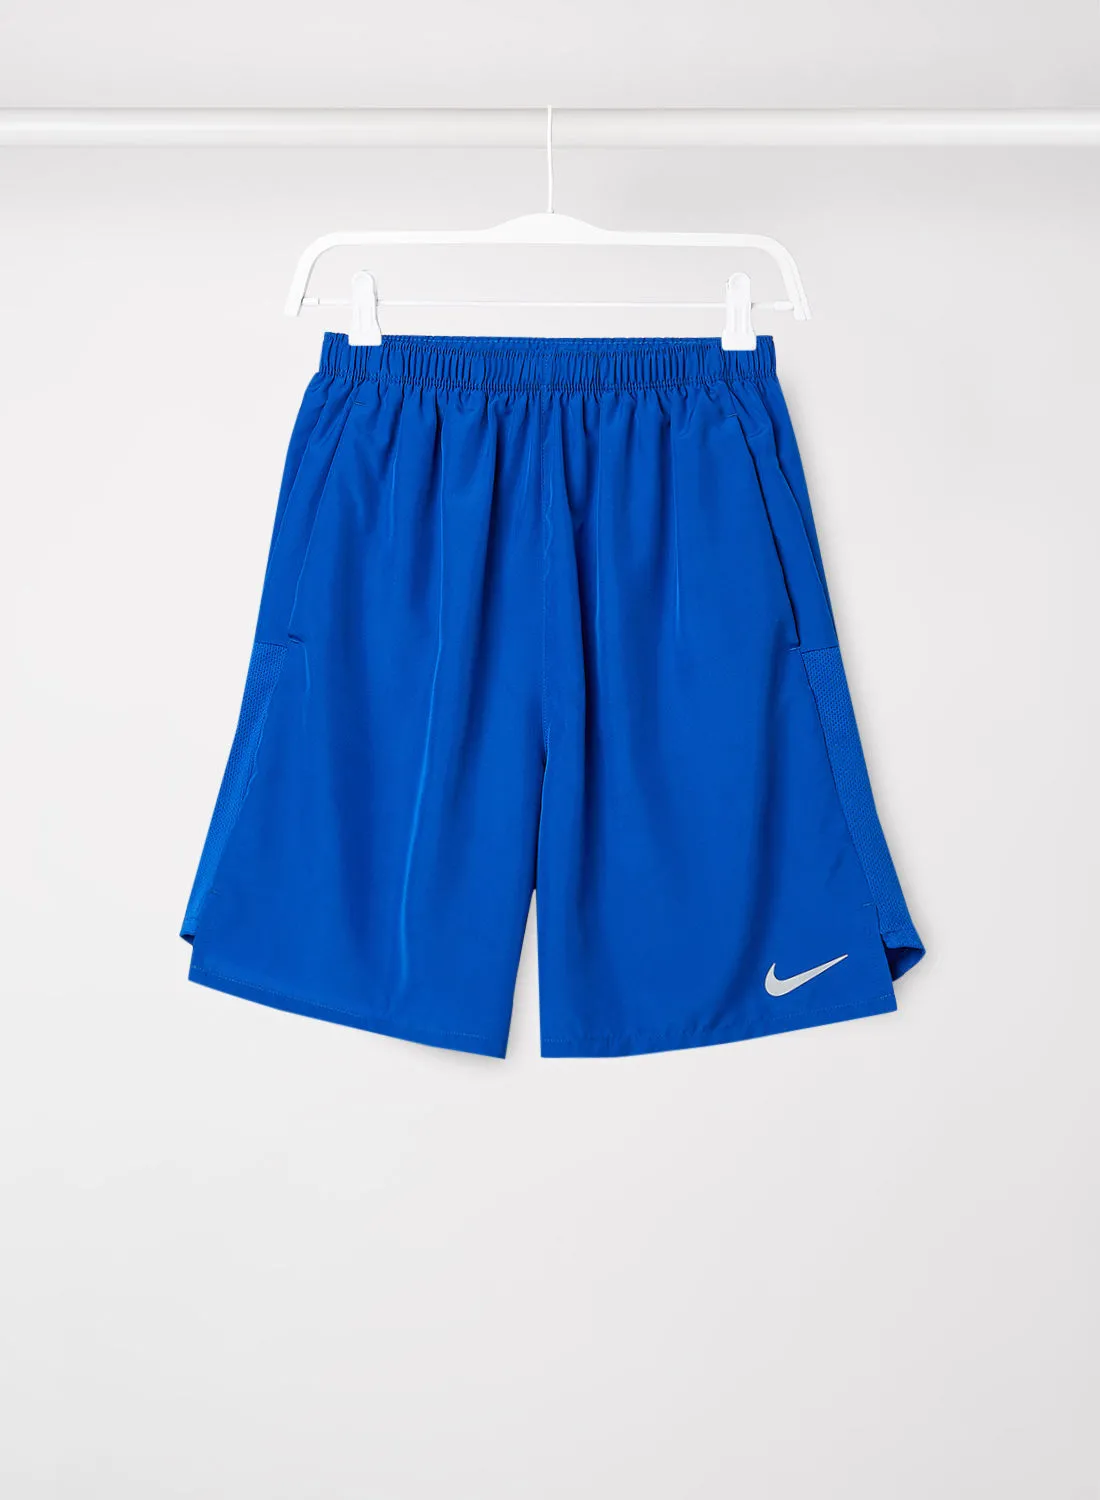 Nike Boys Challenger Training Shorts